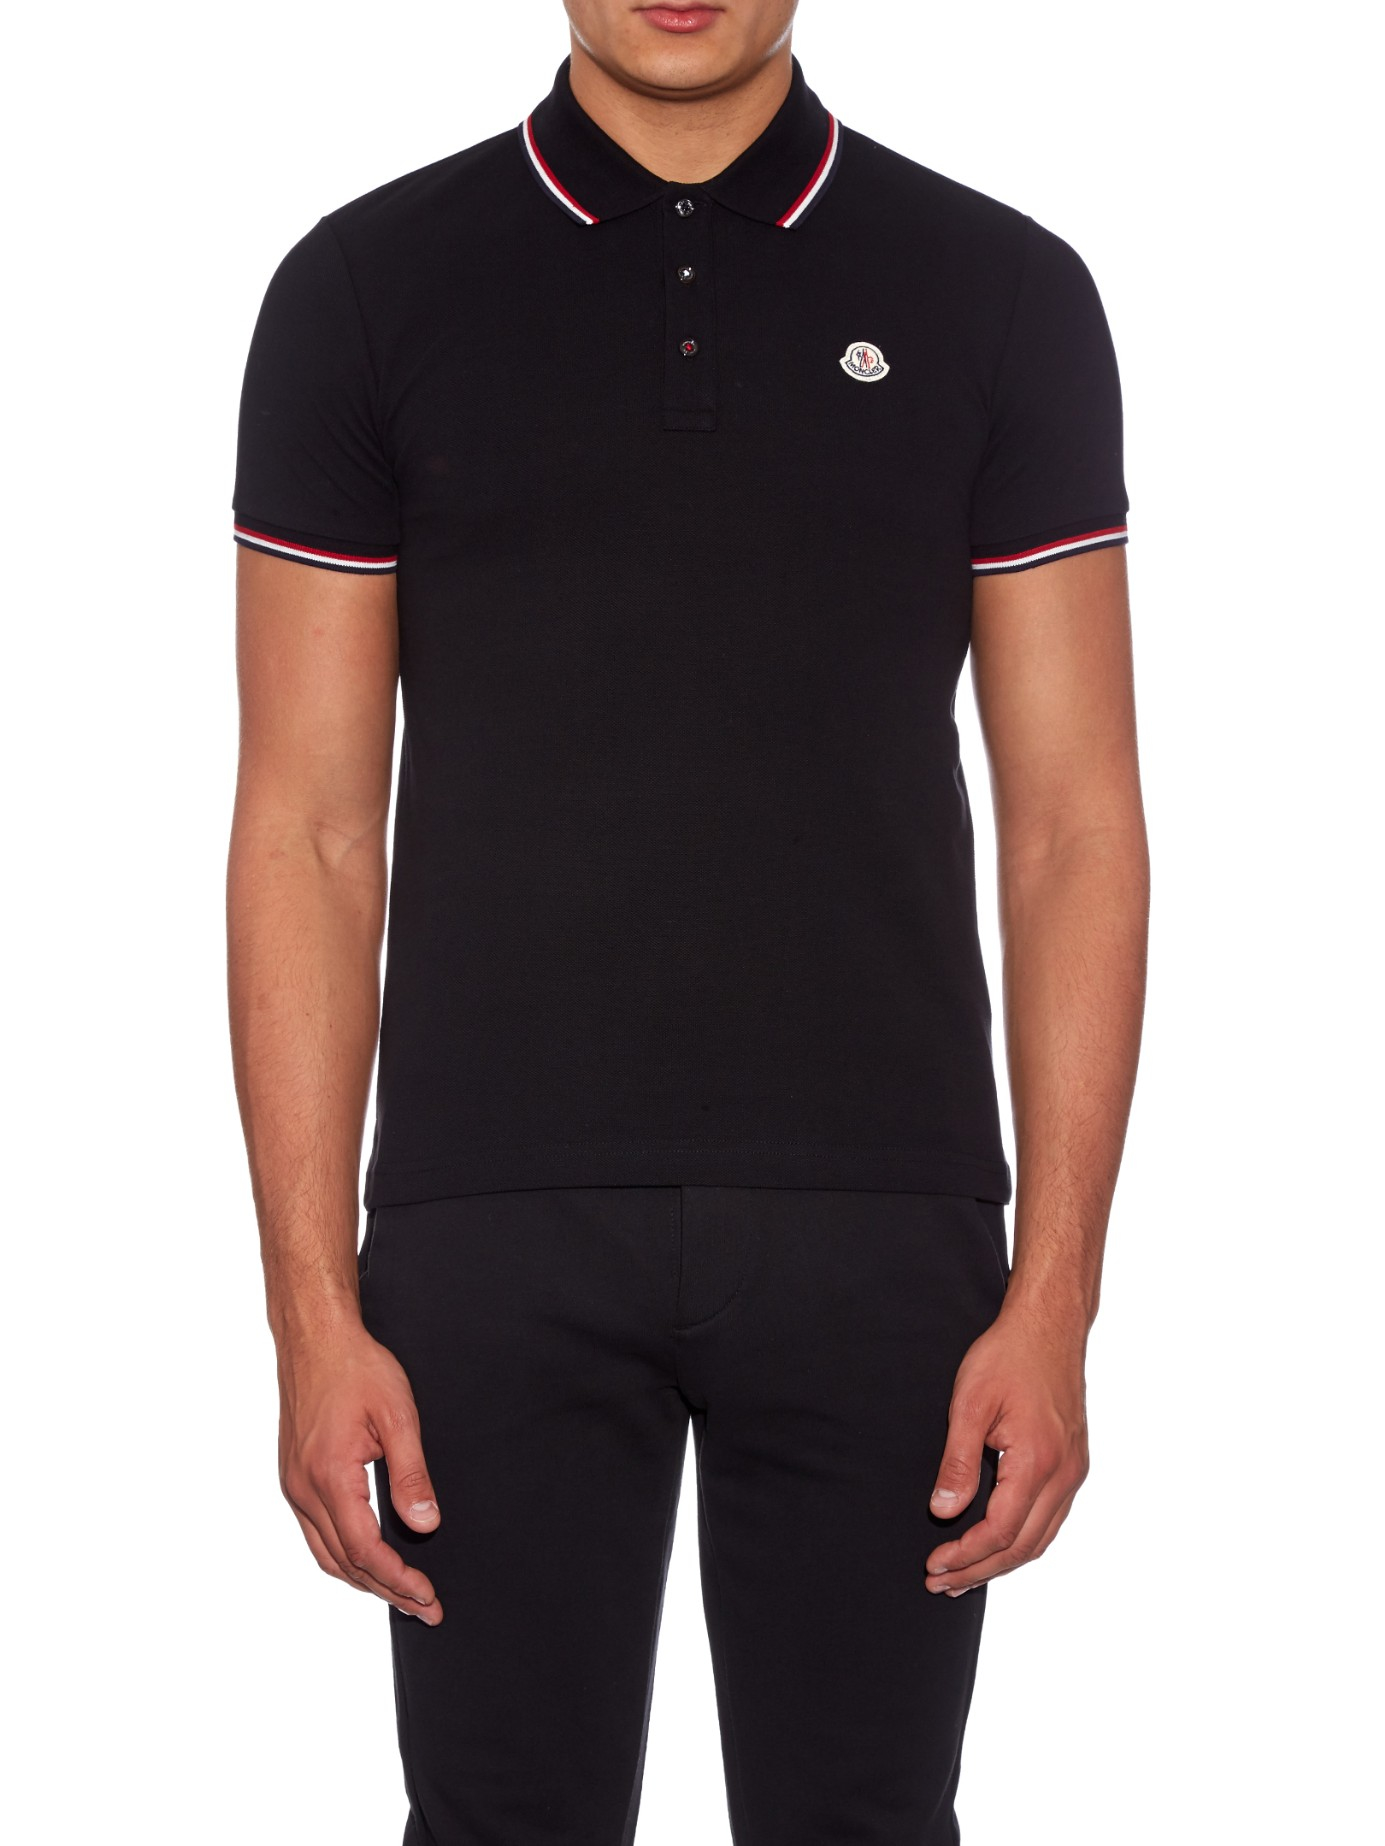 Moncler Striped-trim Cotton-piqué Polo Shirt in Black for Men - Lyst